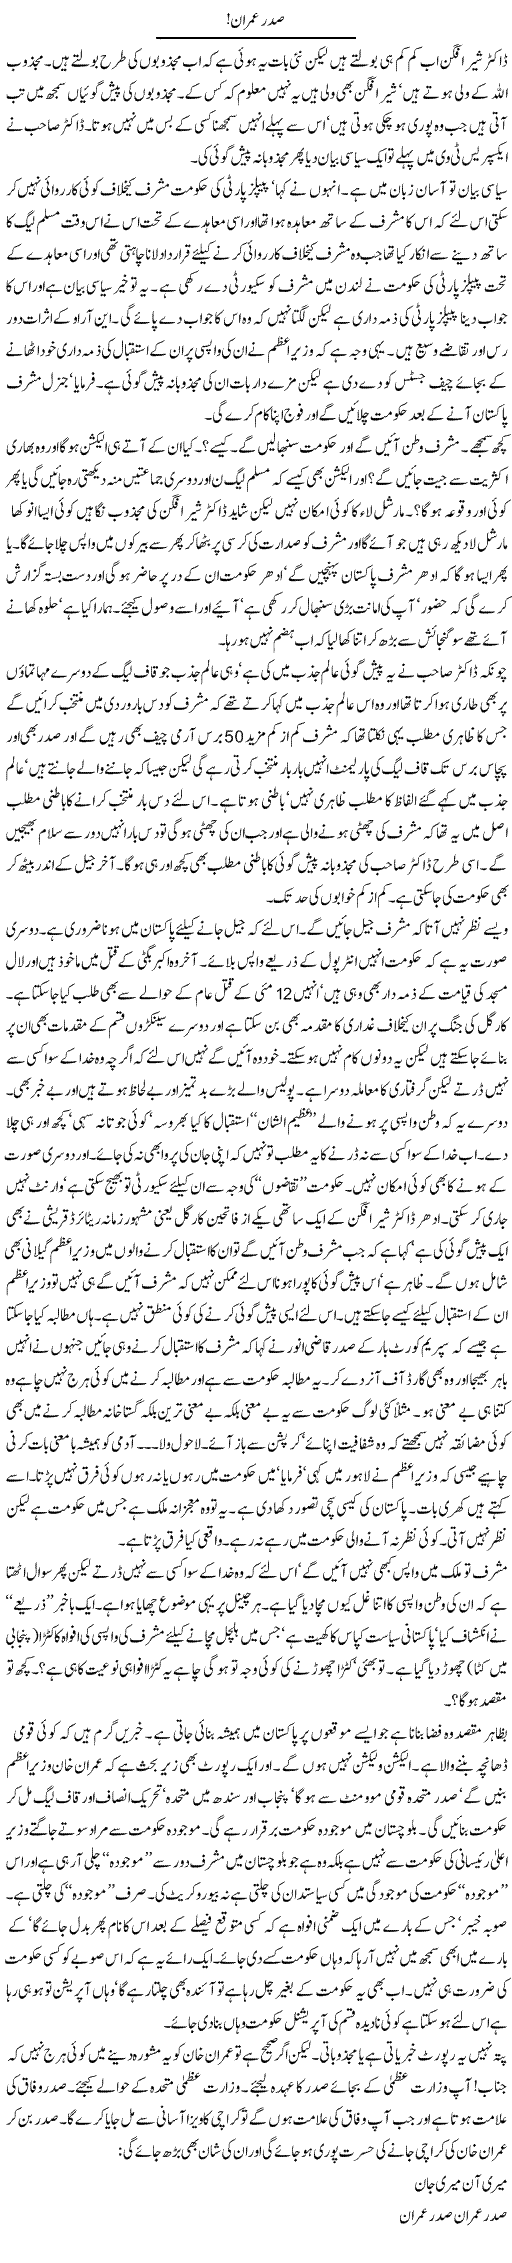 President Imran Express Column Abdullah Tariq 16 September 2010